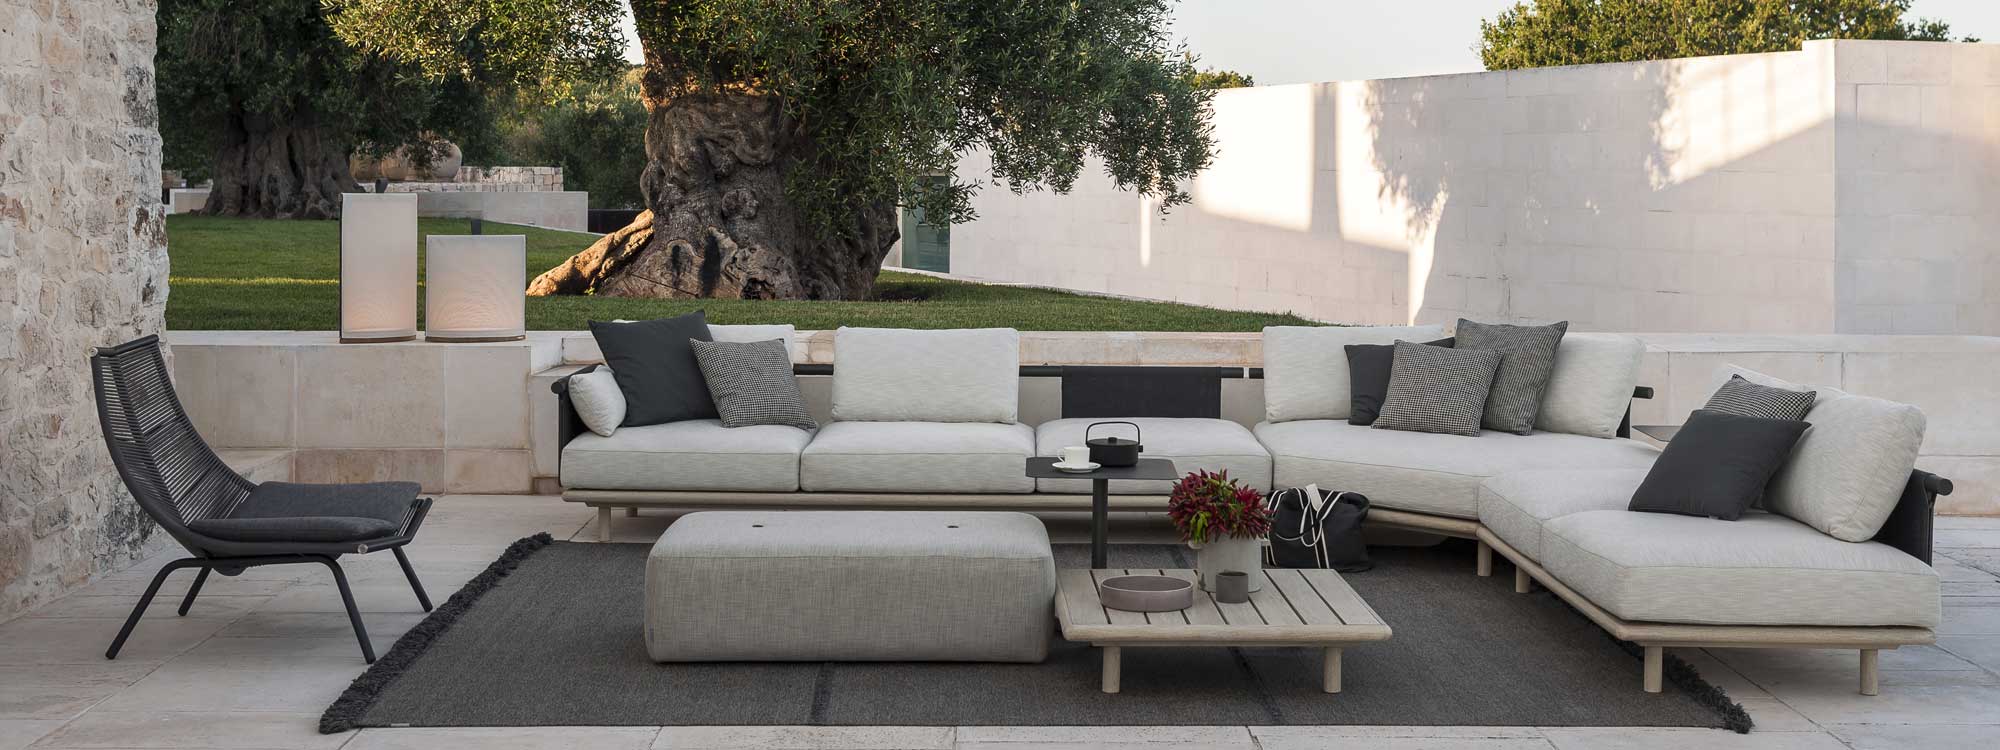 Eden luxury outdoor sofa is a modern garden sofa & modular exterior sofa in all-weather furniture materials by Roda Italian garden furniture